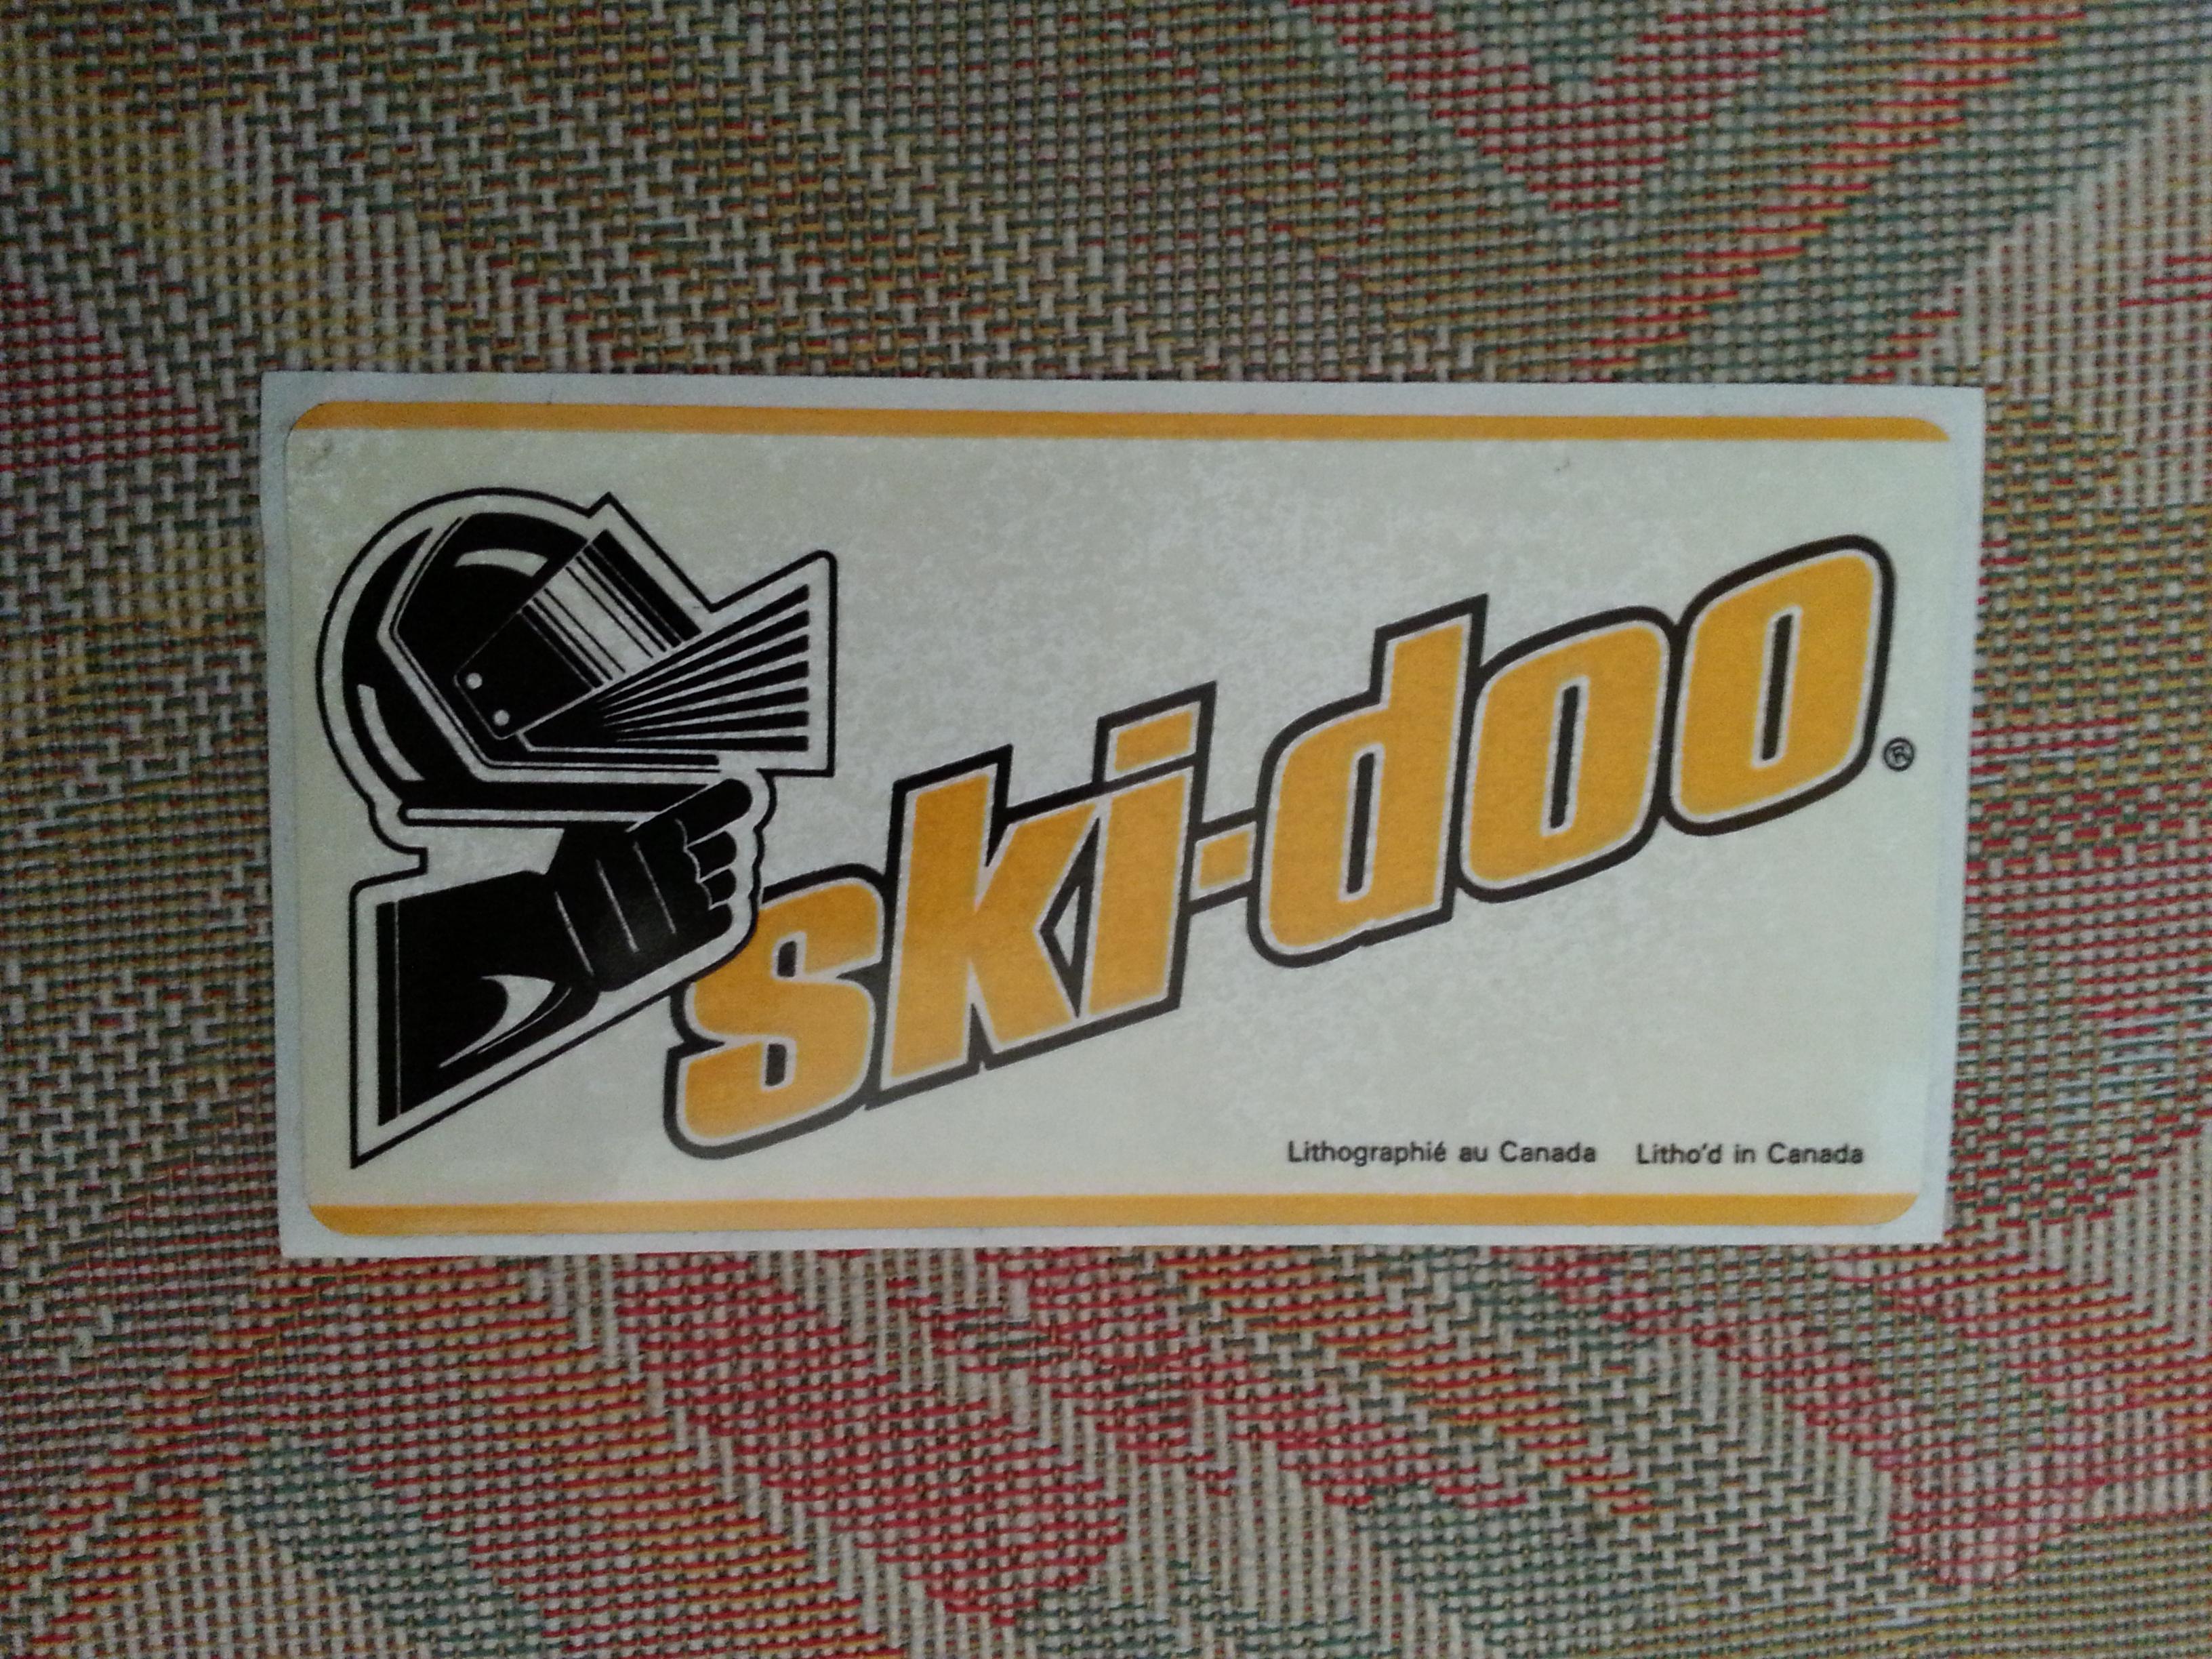 troc de troc sticker autocollant ski-doo image 0